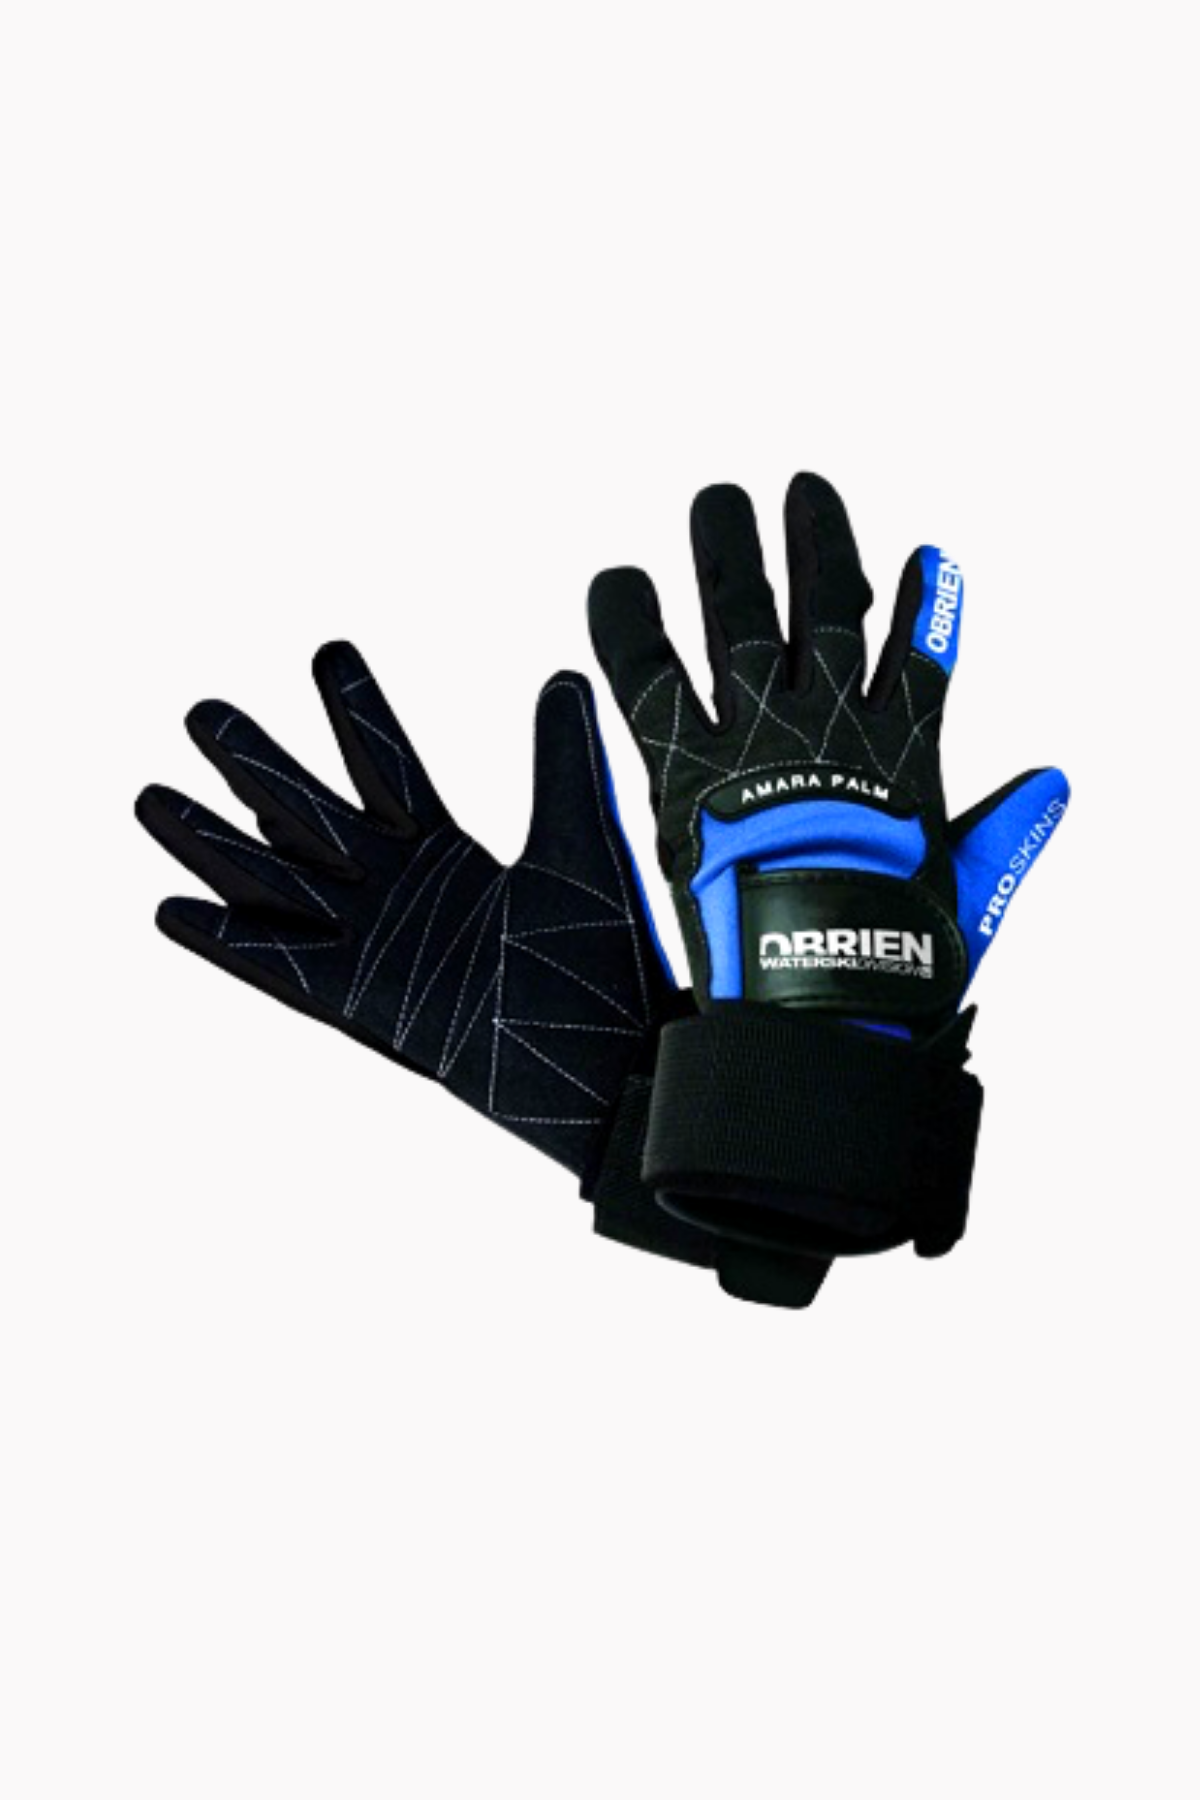 O'Brien Pro Skin Water Ski Gloves - Cottage Toys Canada